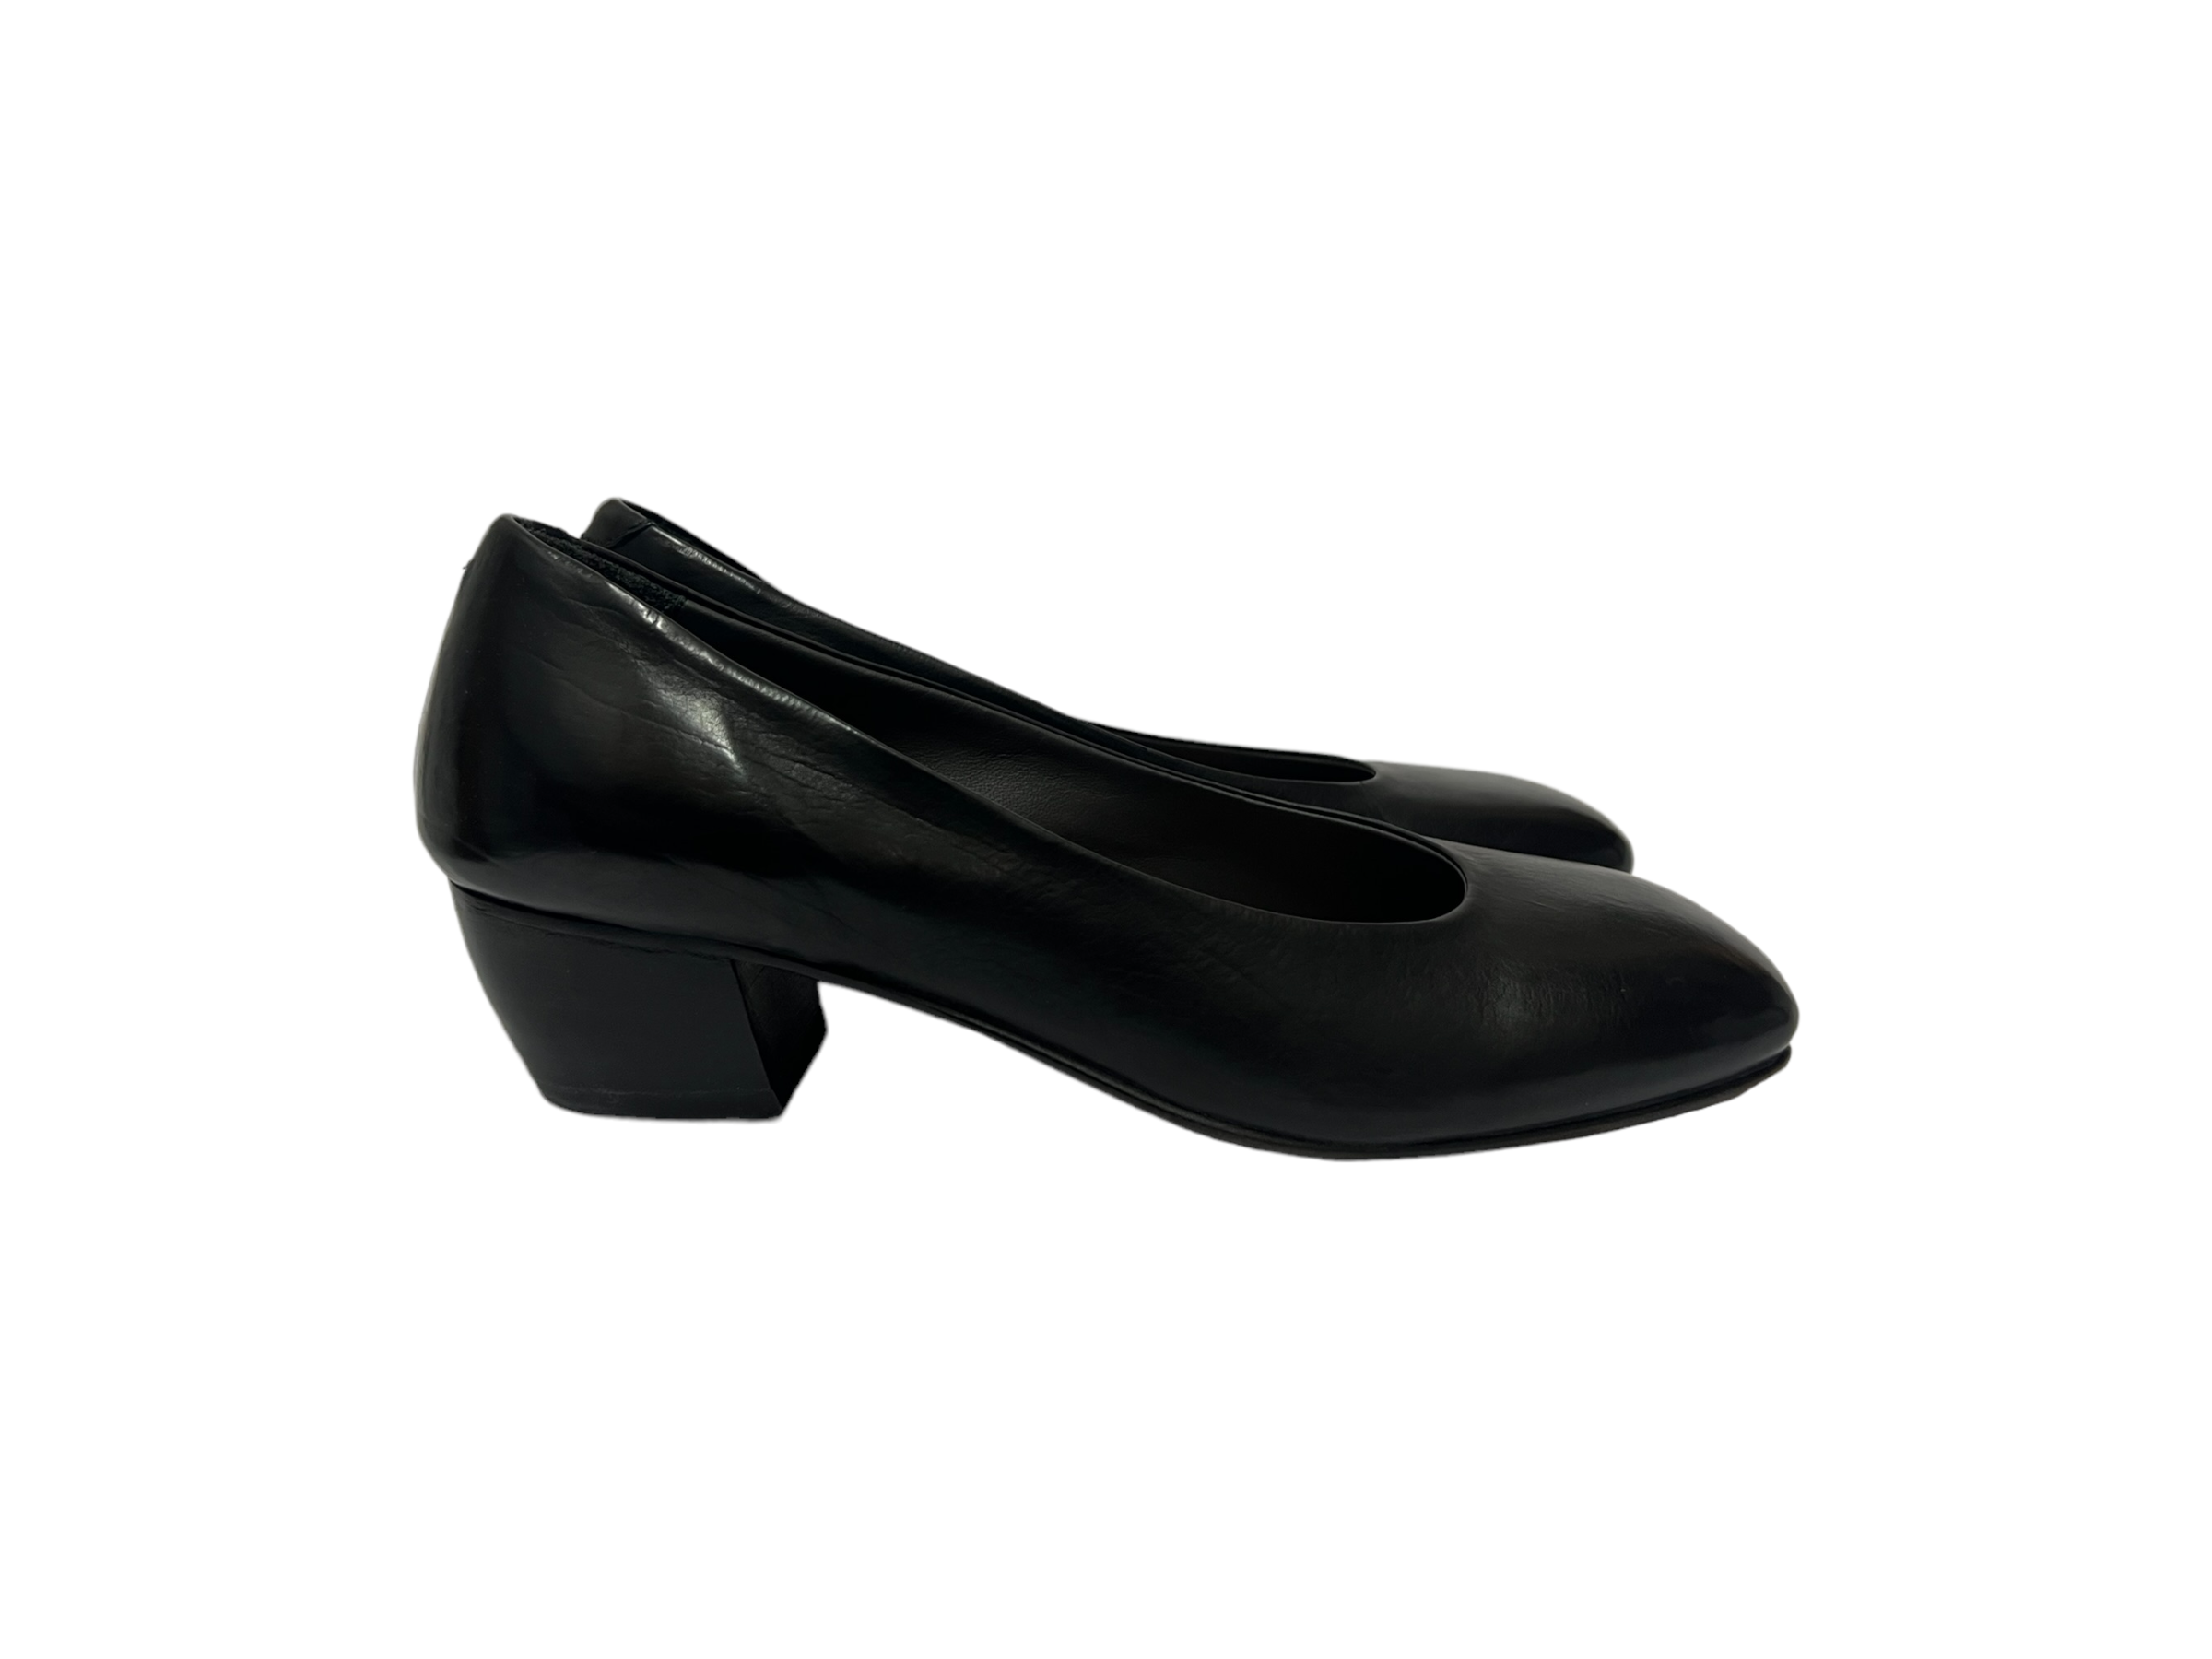 Moma lille hæl, sort - MOMA - Fiona sko